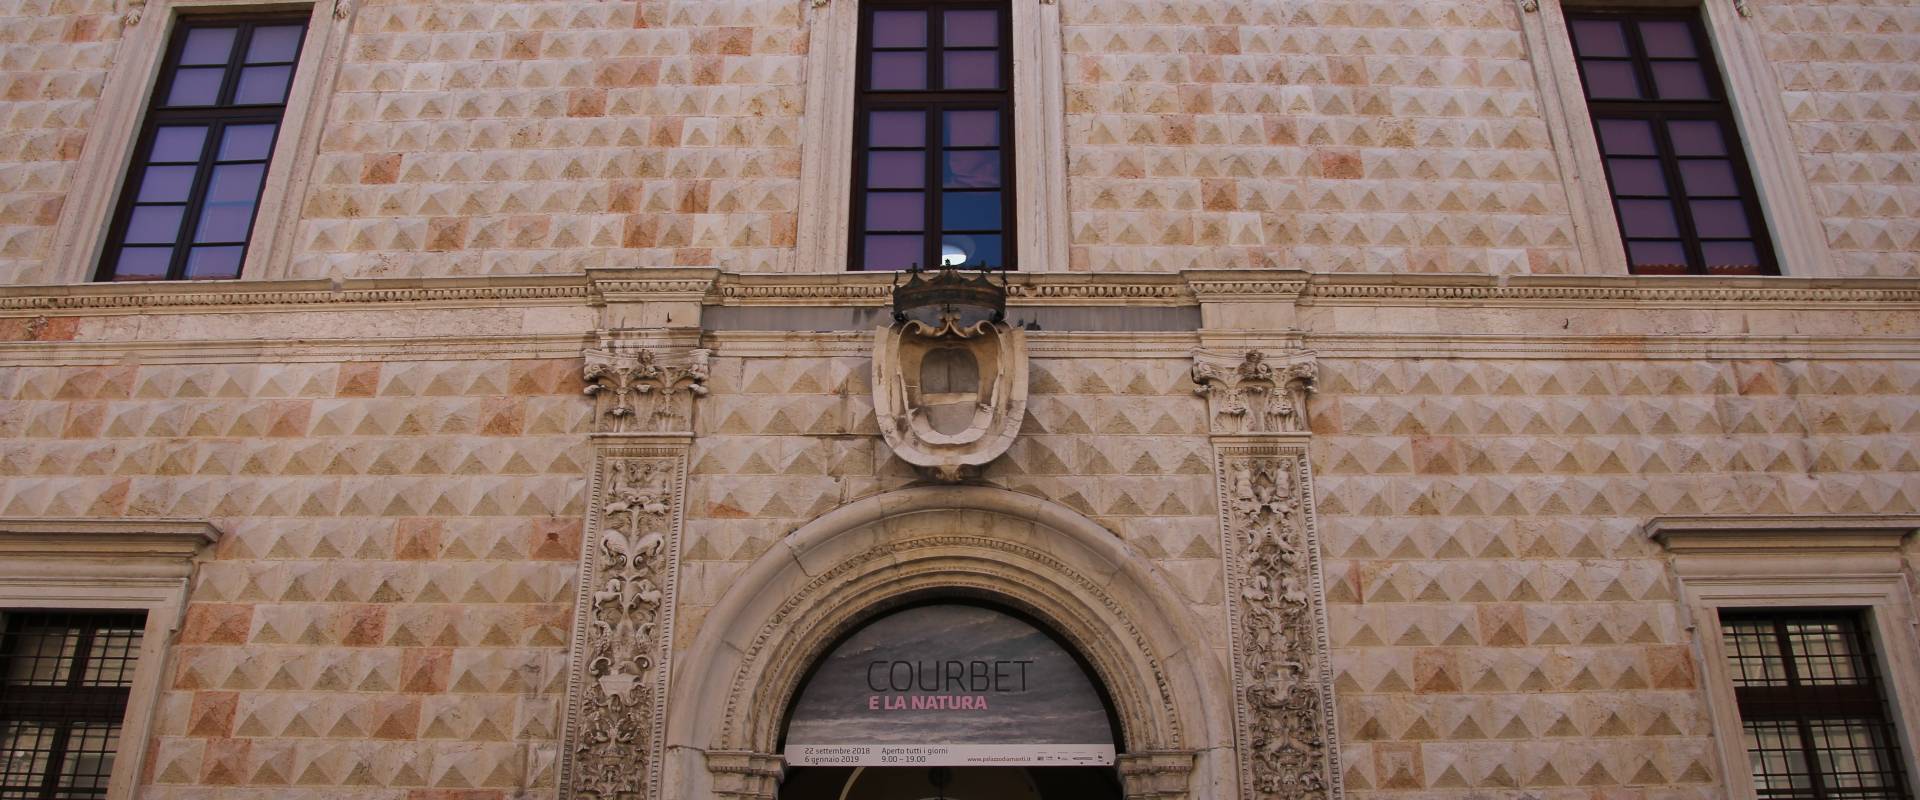 Ferrara, palazzo dei Diamanti (07) foto di Gianni Careddu